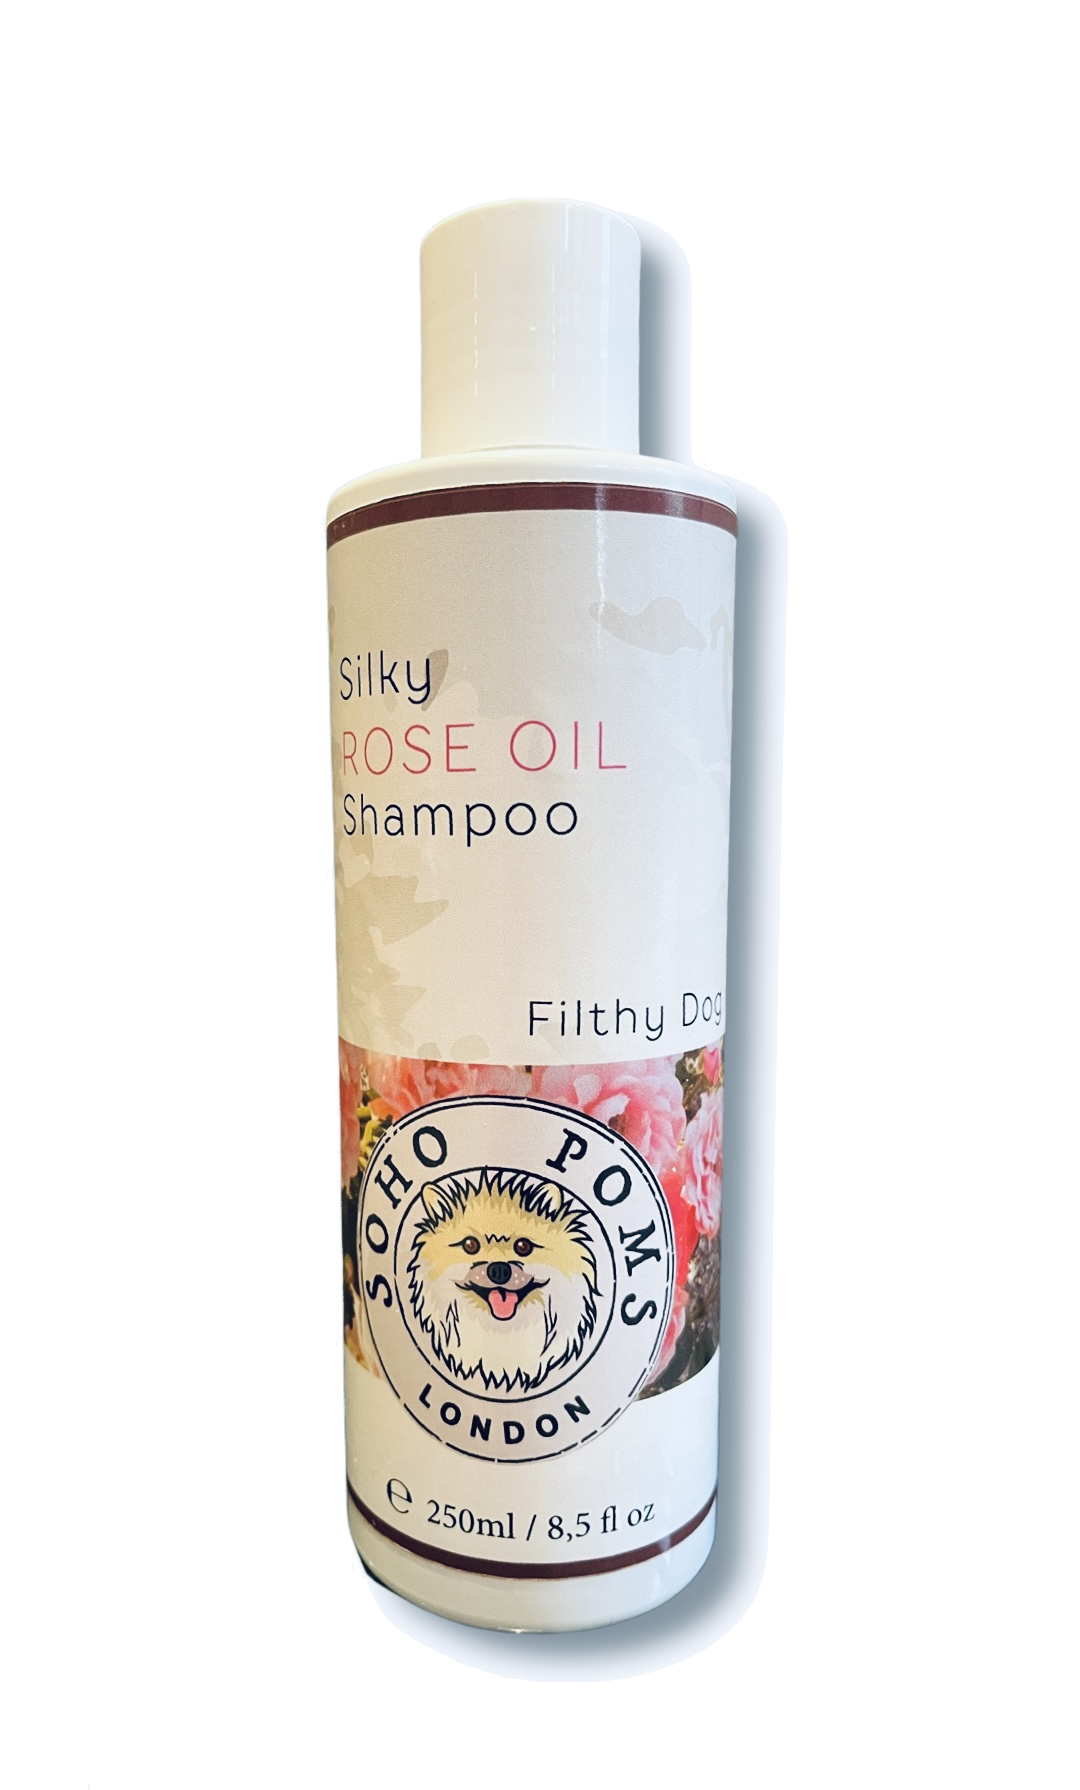 Rosenöl-Shampoo Silky Rose Oil von Soho Poms